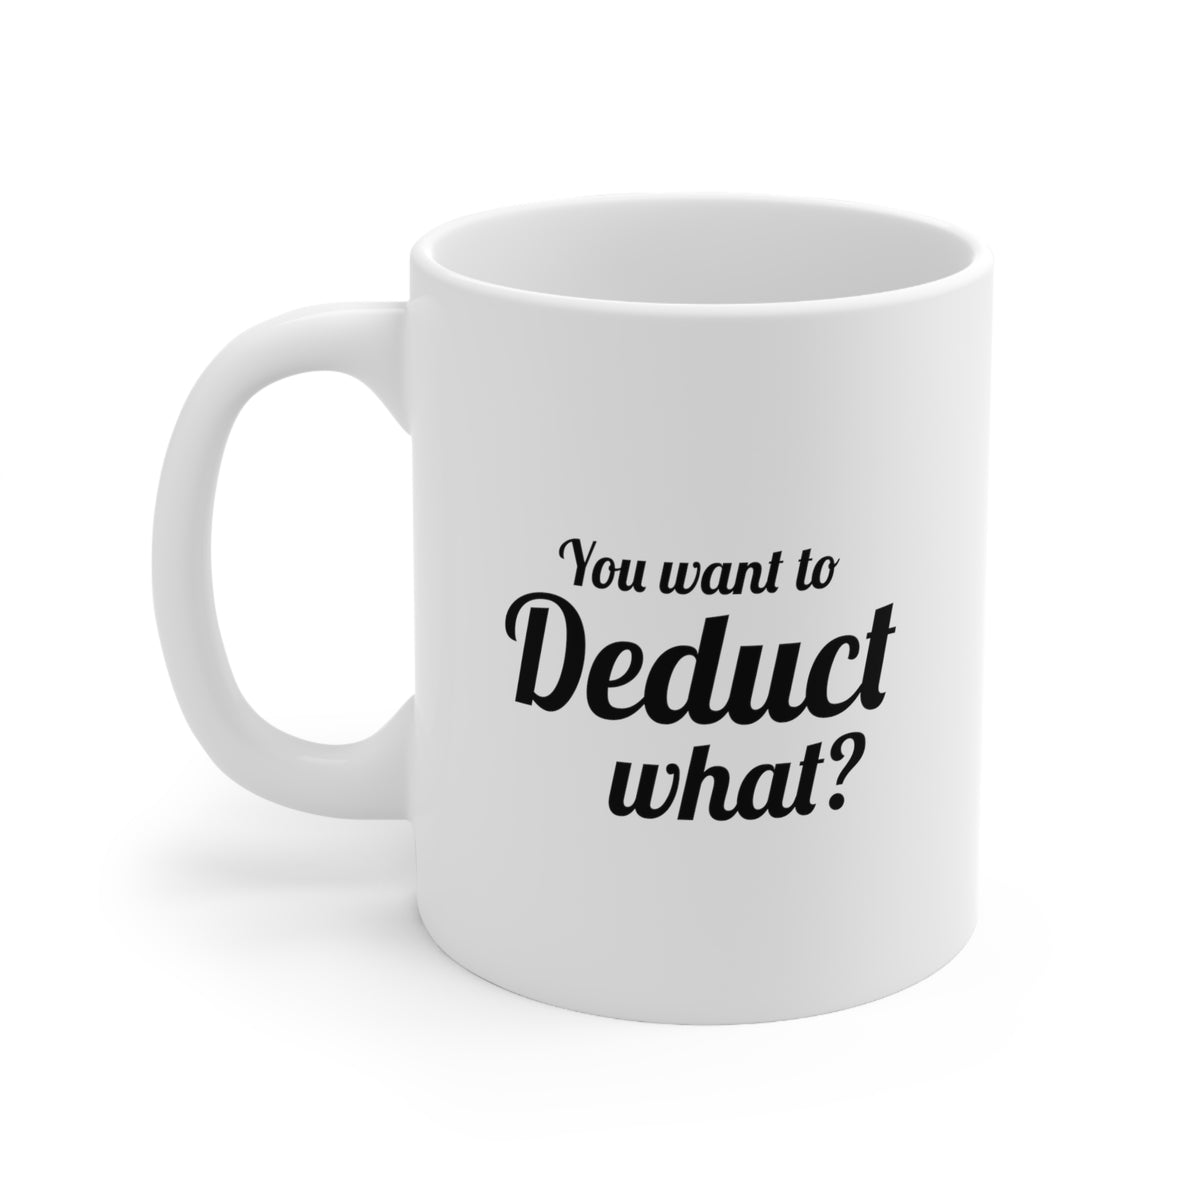 Funny Tax Coffee Mug - You want to deduct what? - Gag Gift For Tax Accountant Season Preparer